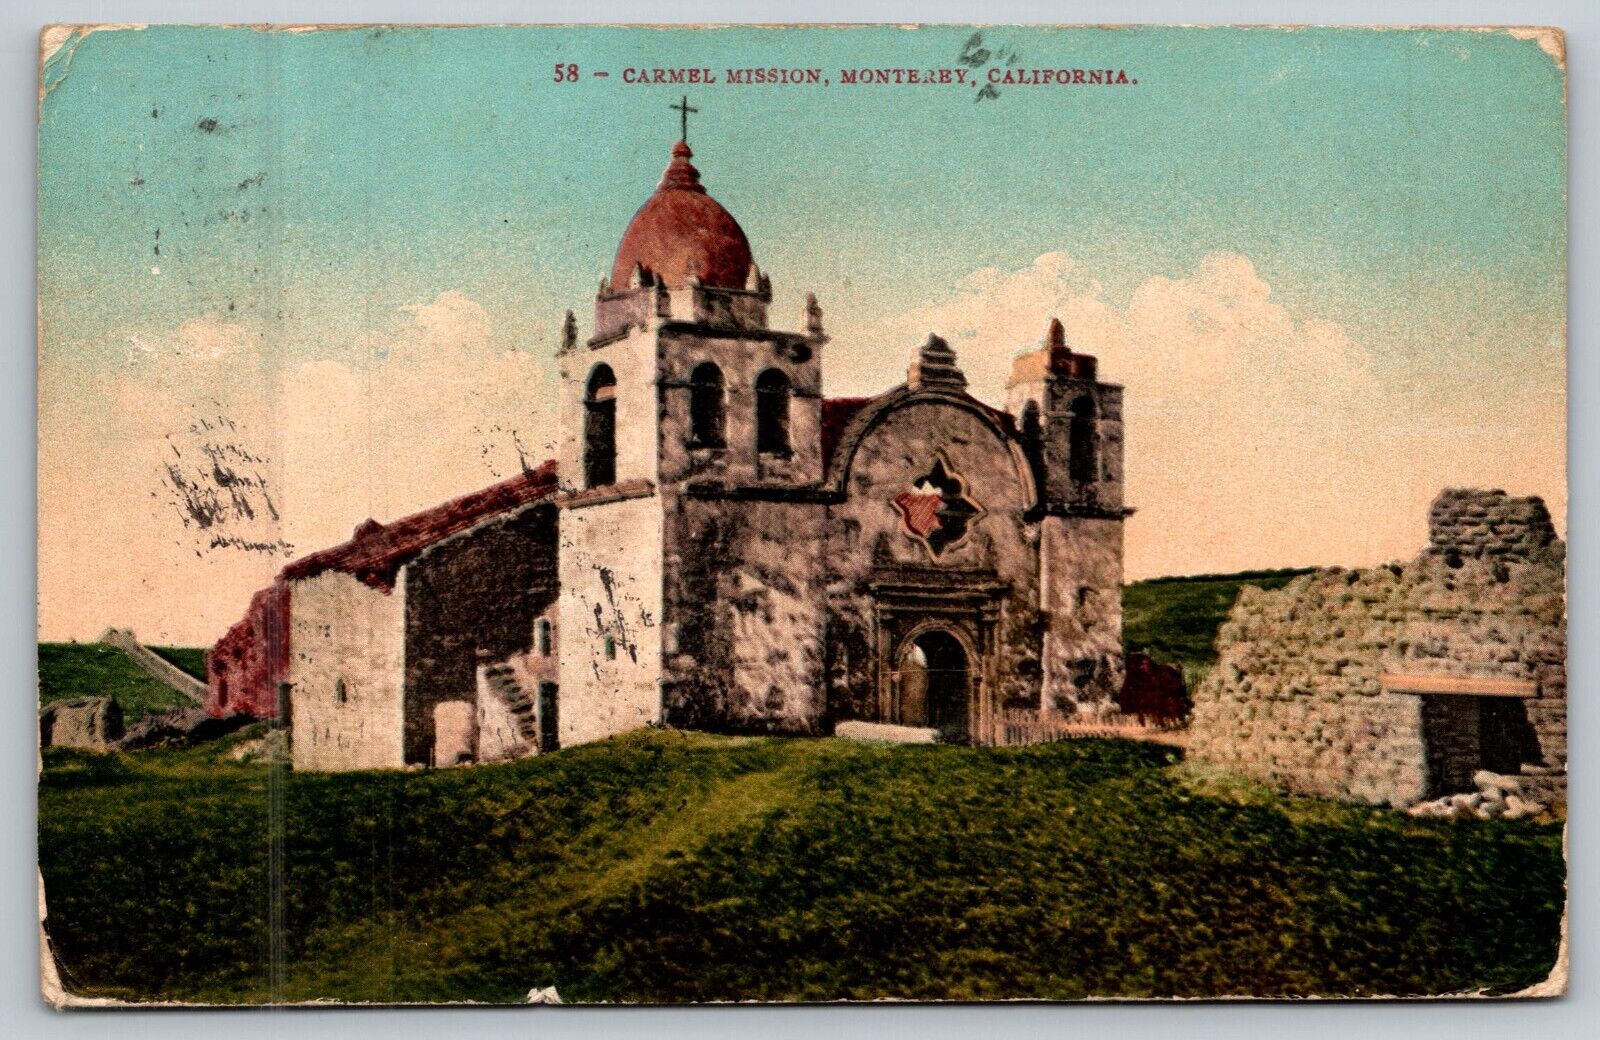 Carmel Mission, Monterey, CA - Postcard